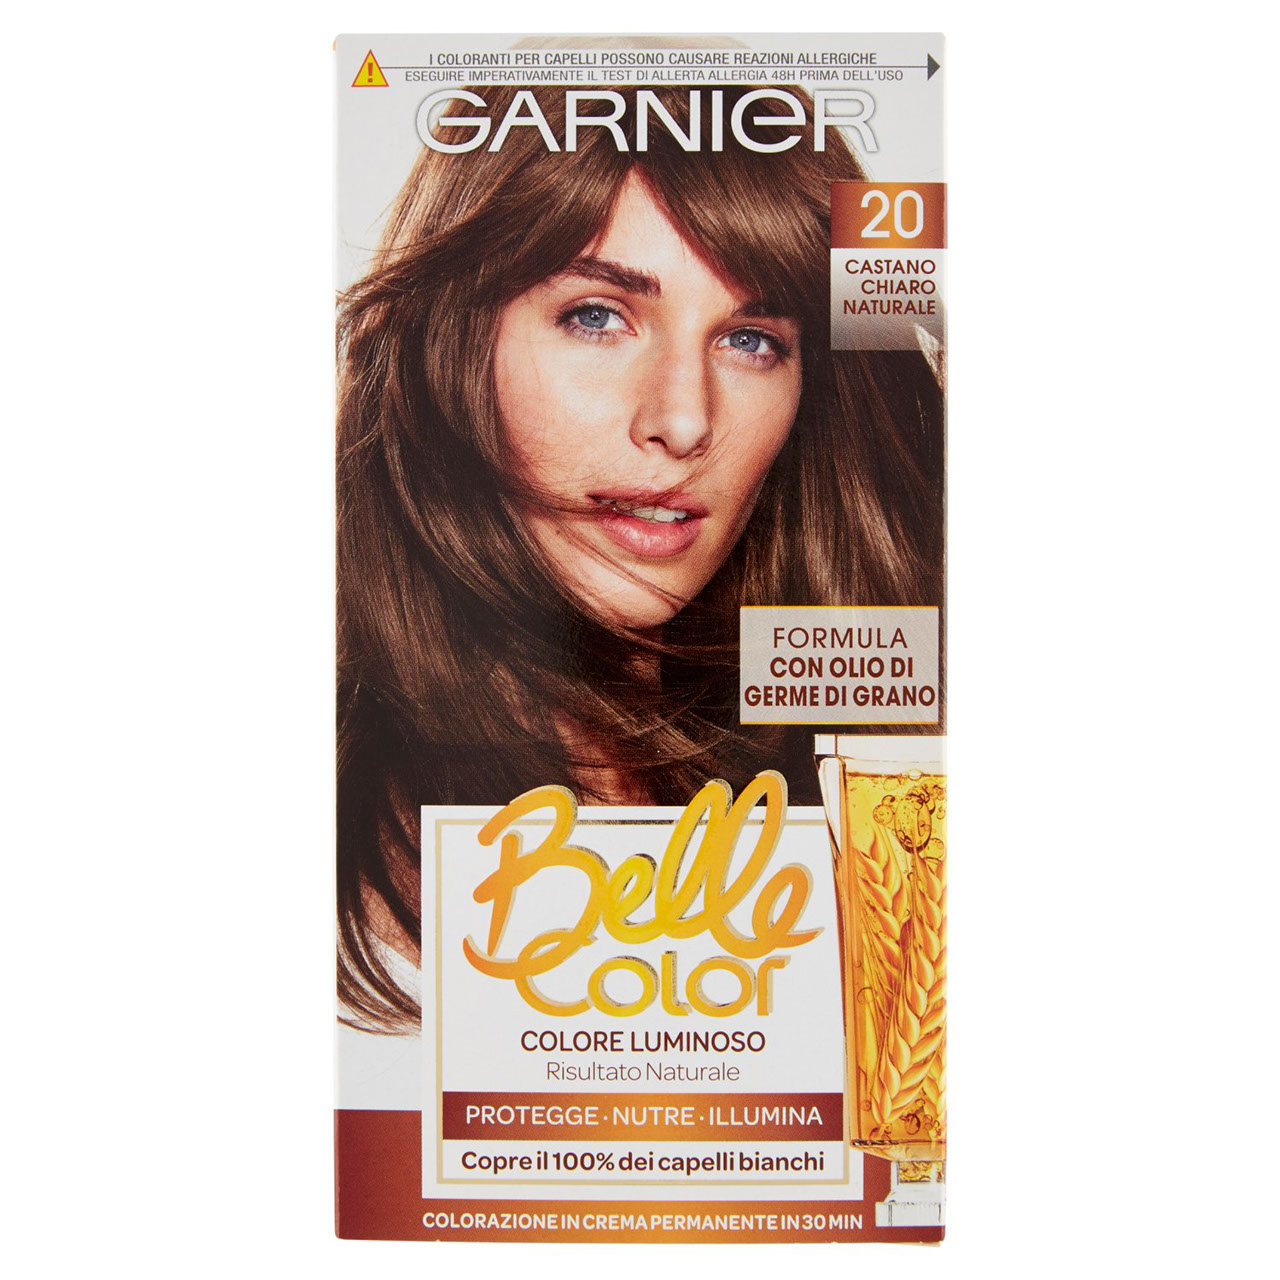 Garnier Belle Color 20 in vendita online